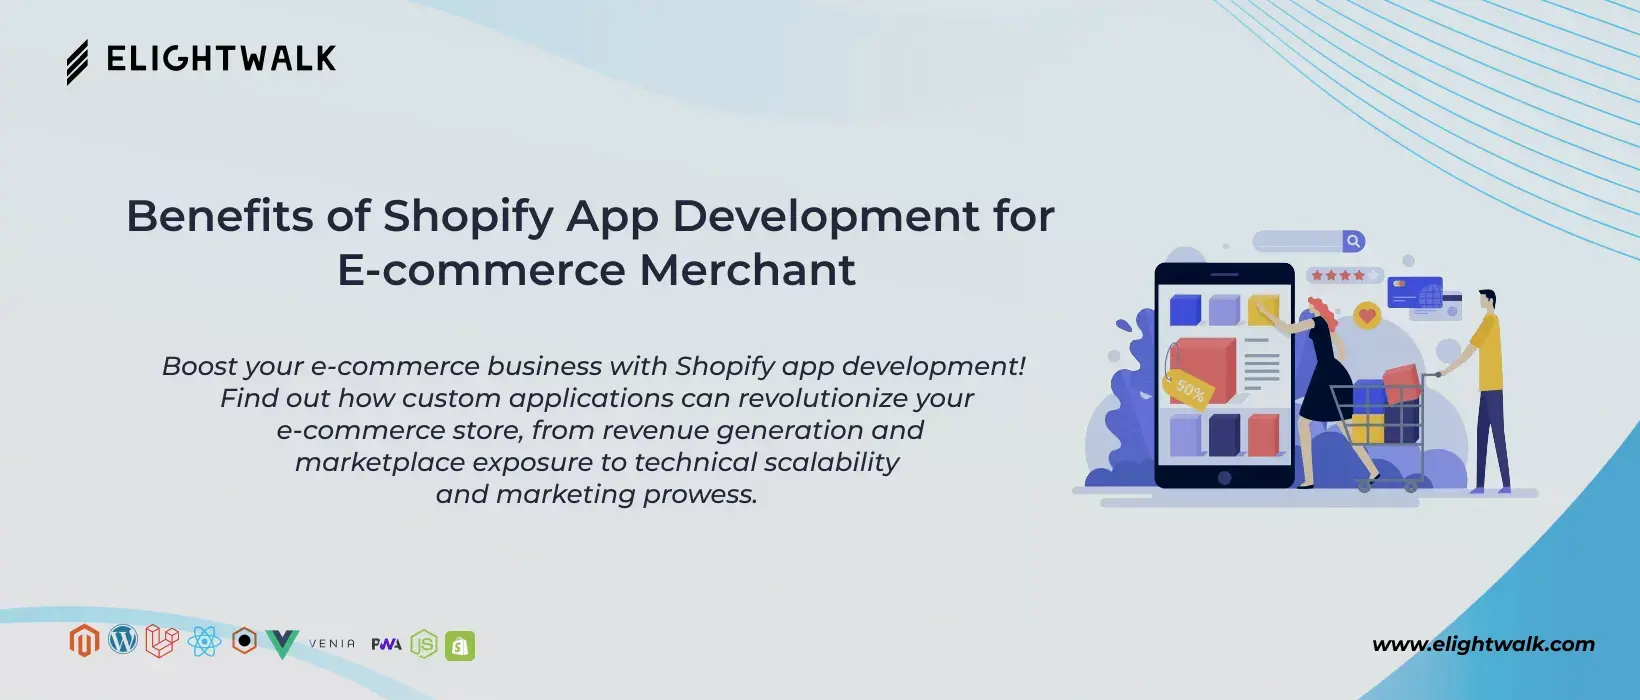 Benefits of Shopify App Development for E-commerce Merchant